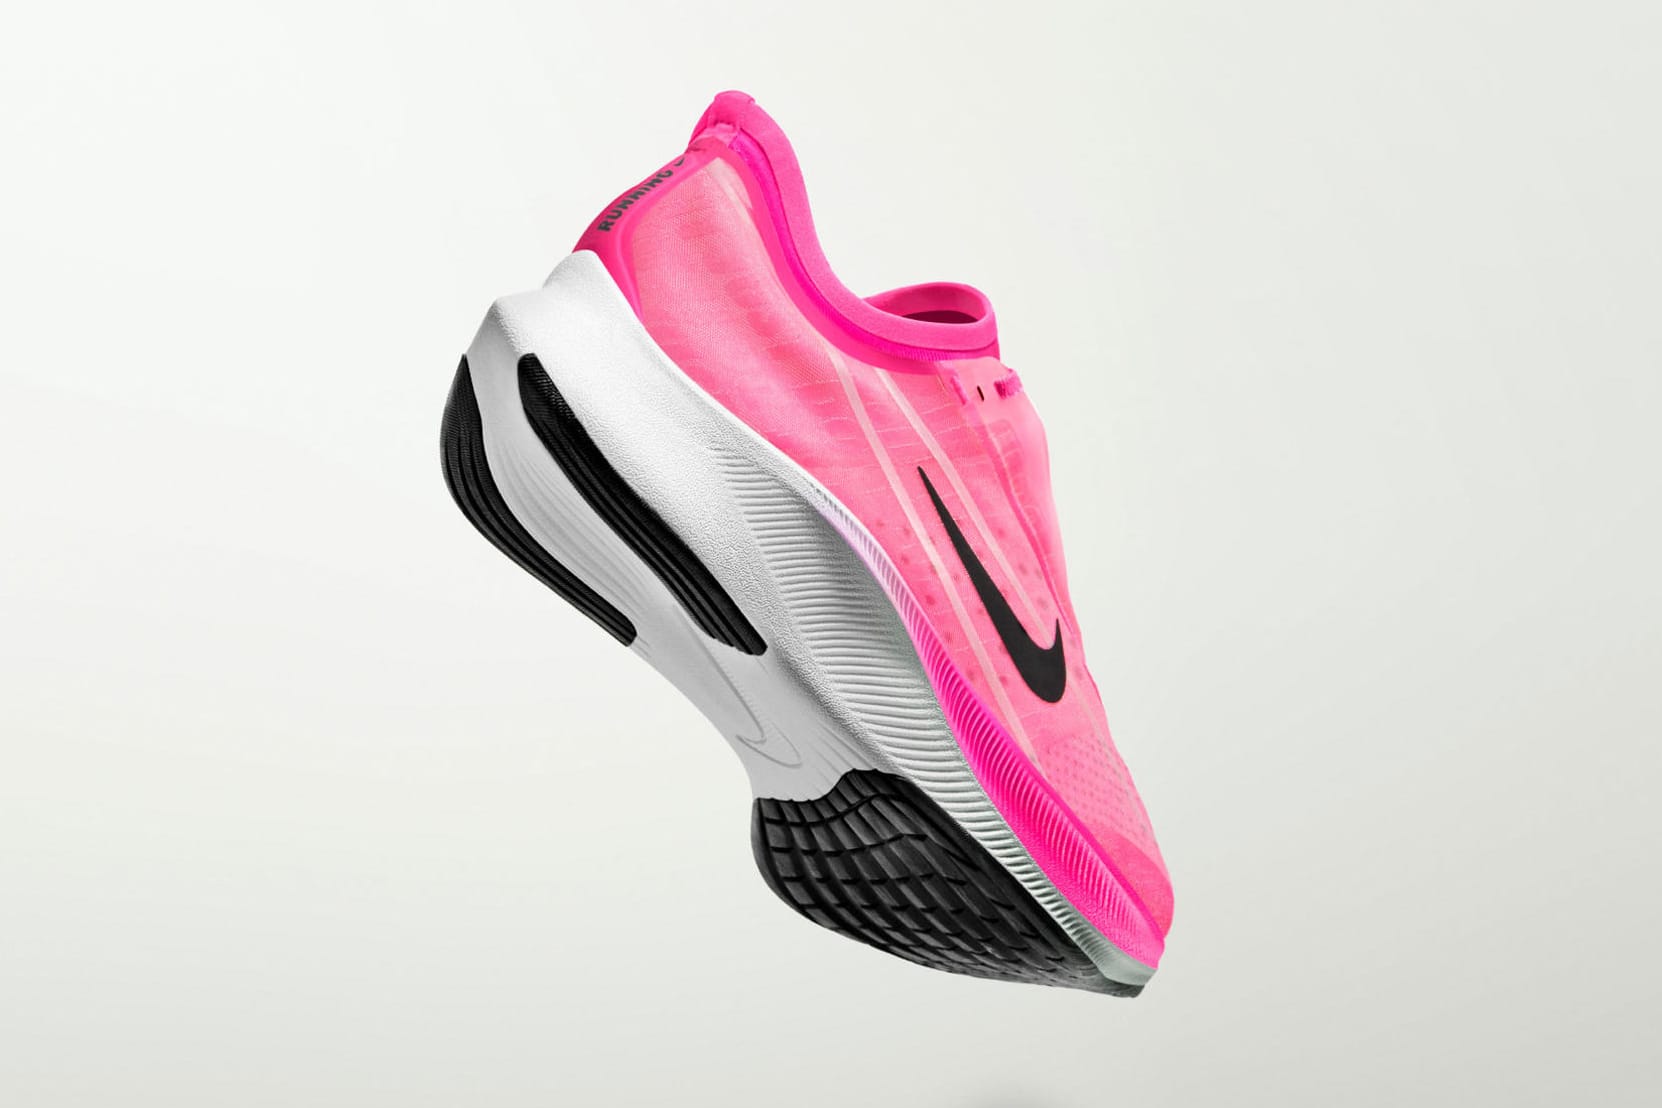 neon pink nike running shoes